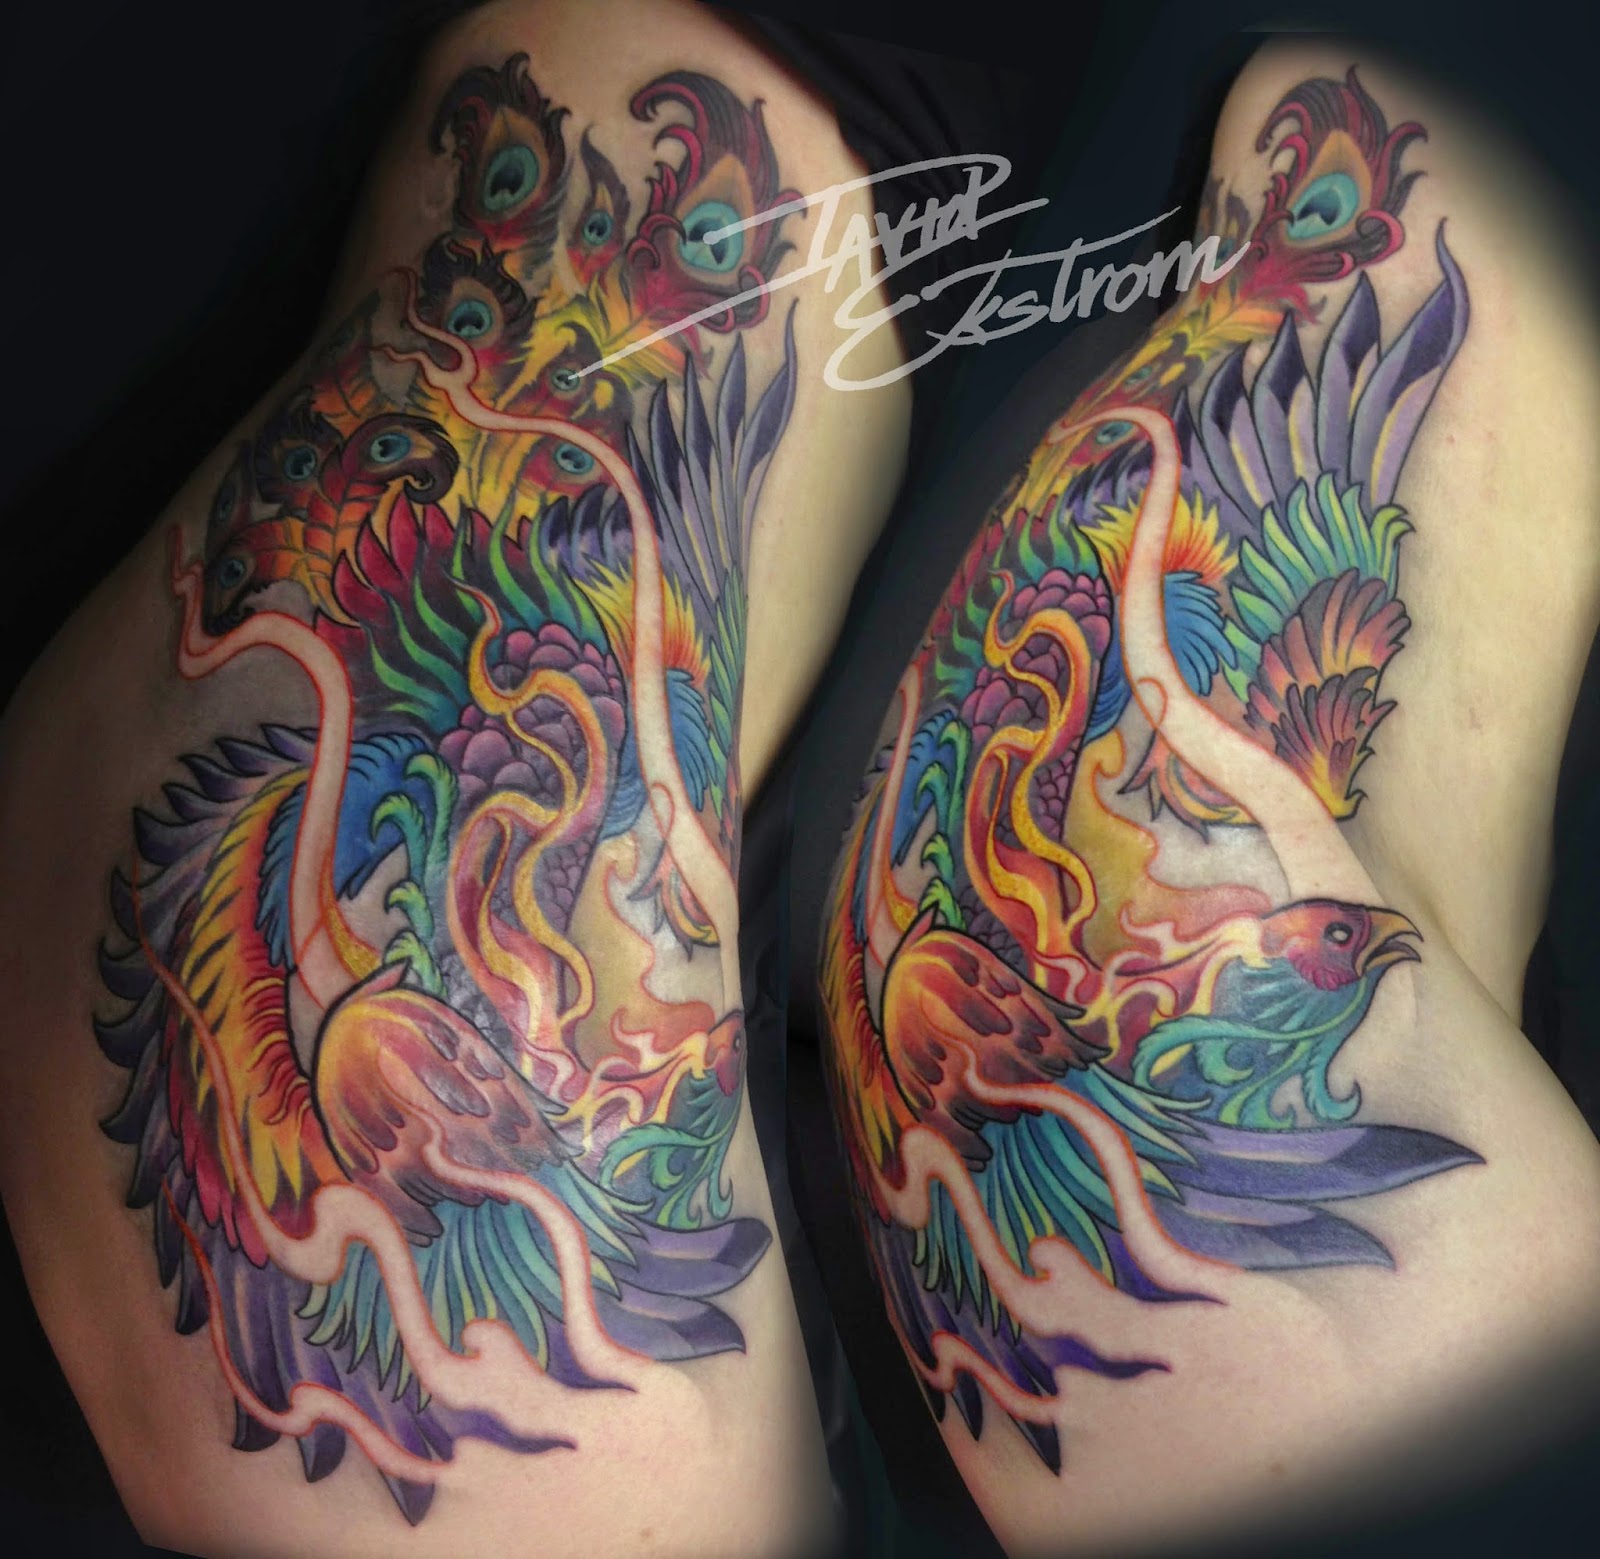 Tattoos & Art by: DAVID EKSTROM: June 2014